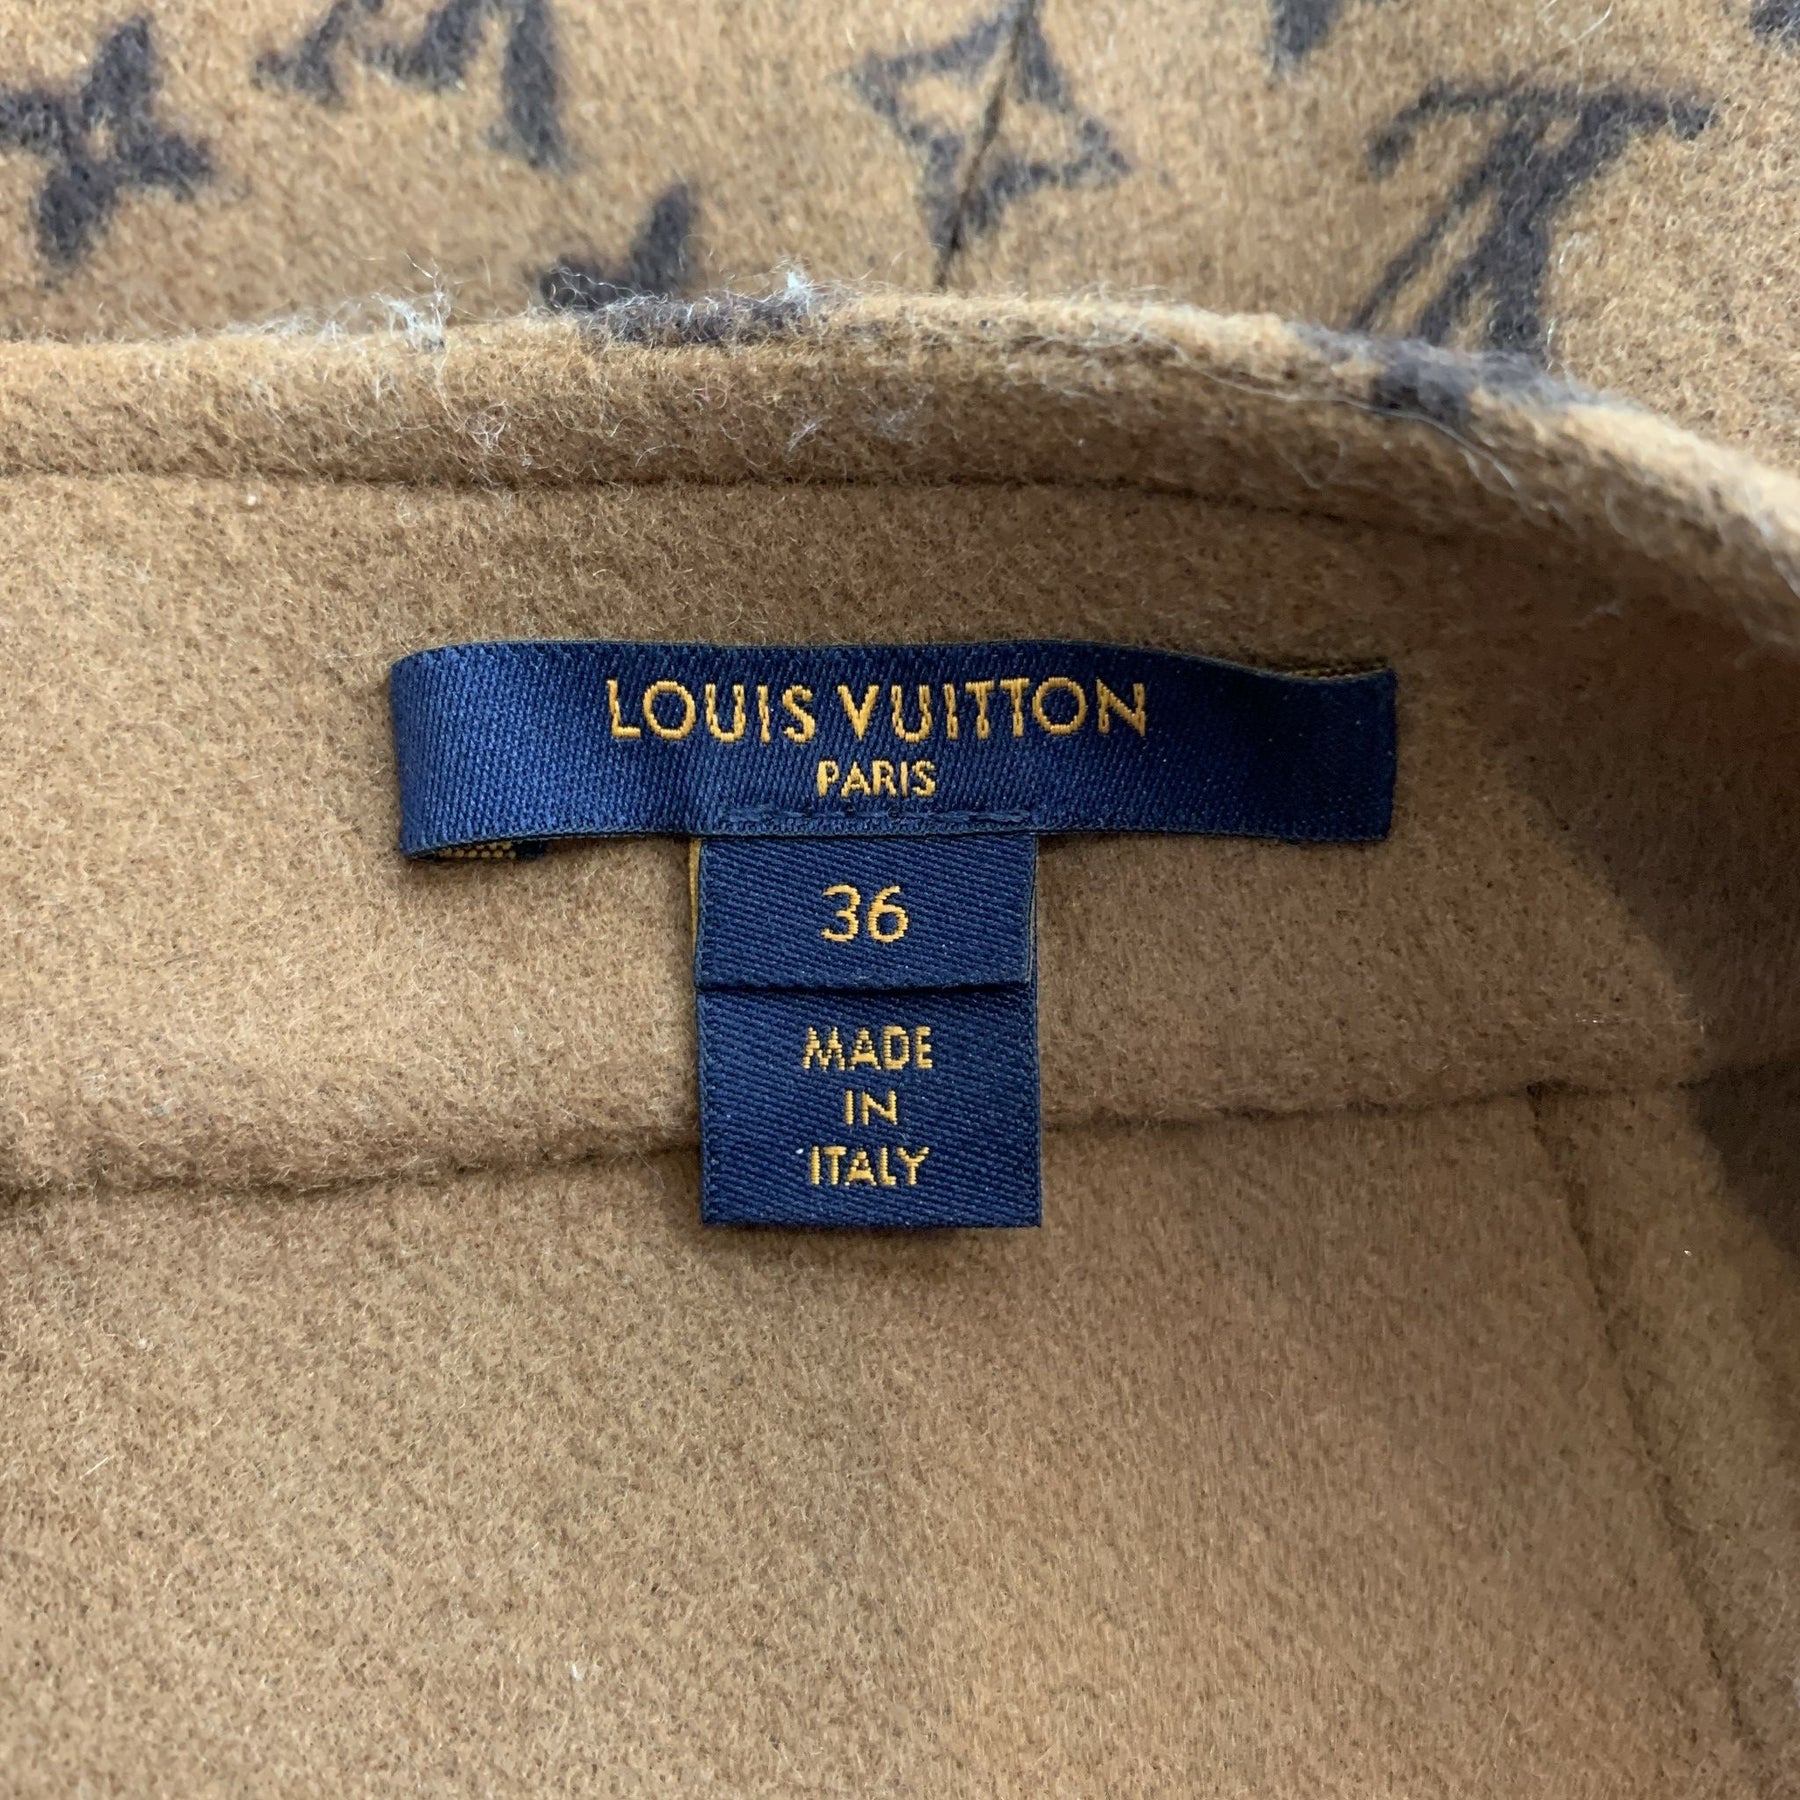 Louis Vuitton Vintage Monogram Mini Skirt ECRU. Size 40